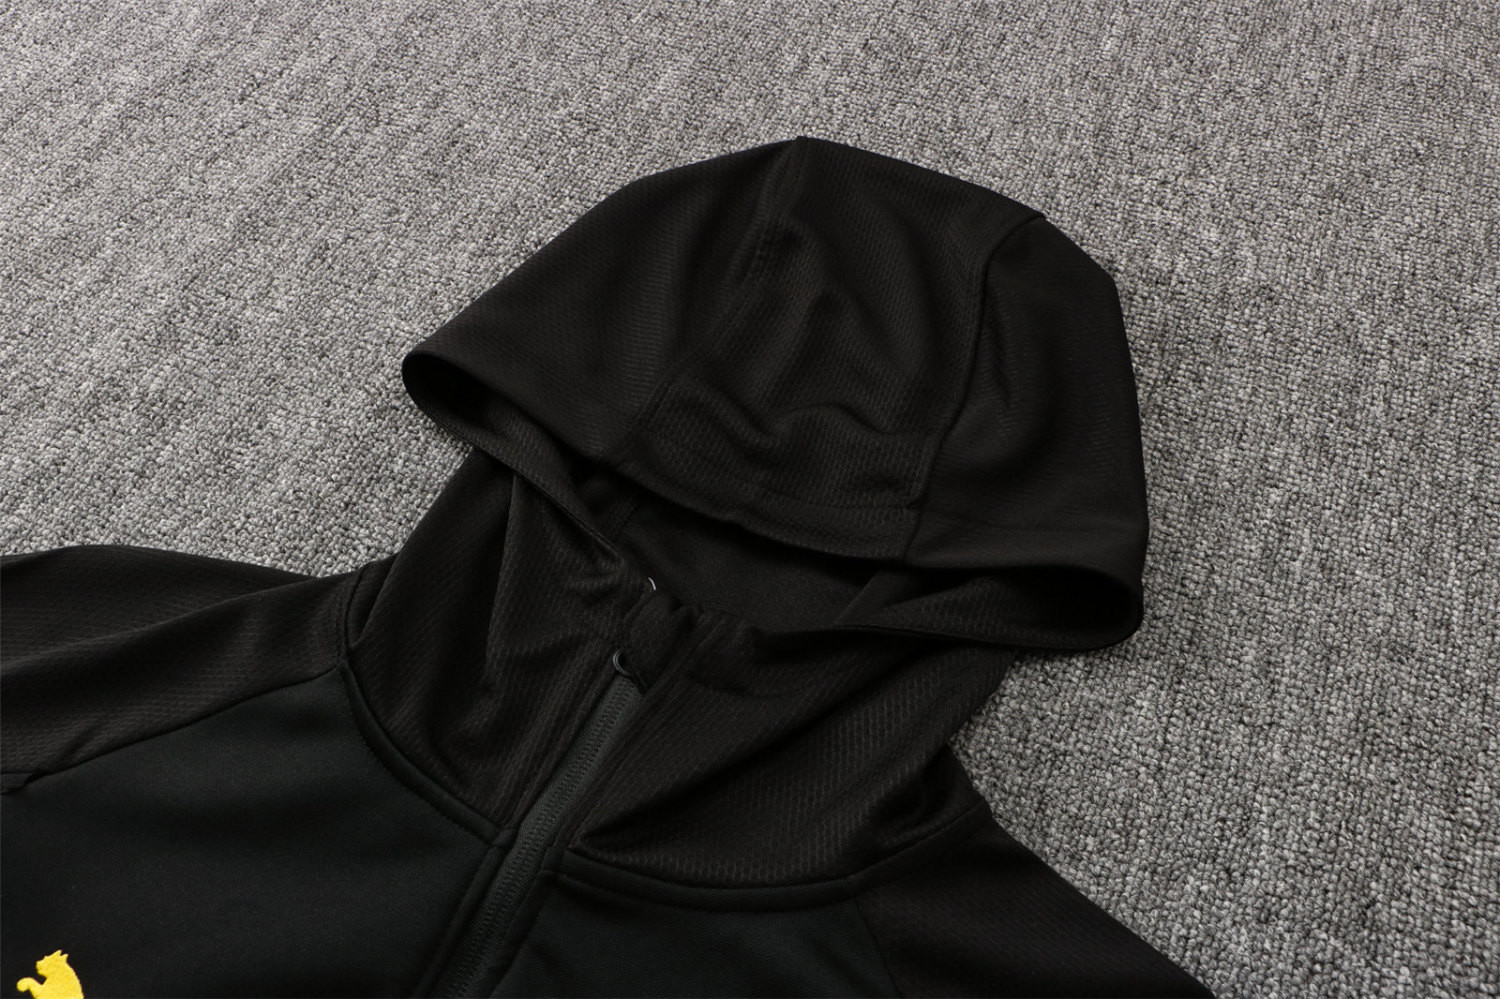 Borussia Dortmund Soccer Training Suit Jacket + Pants Hoodie Black Mens 2021/22